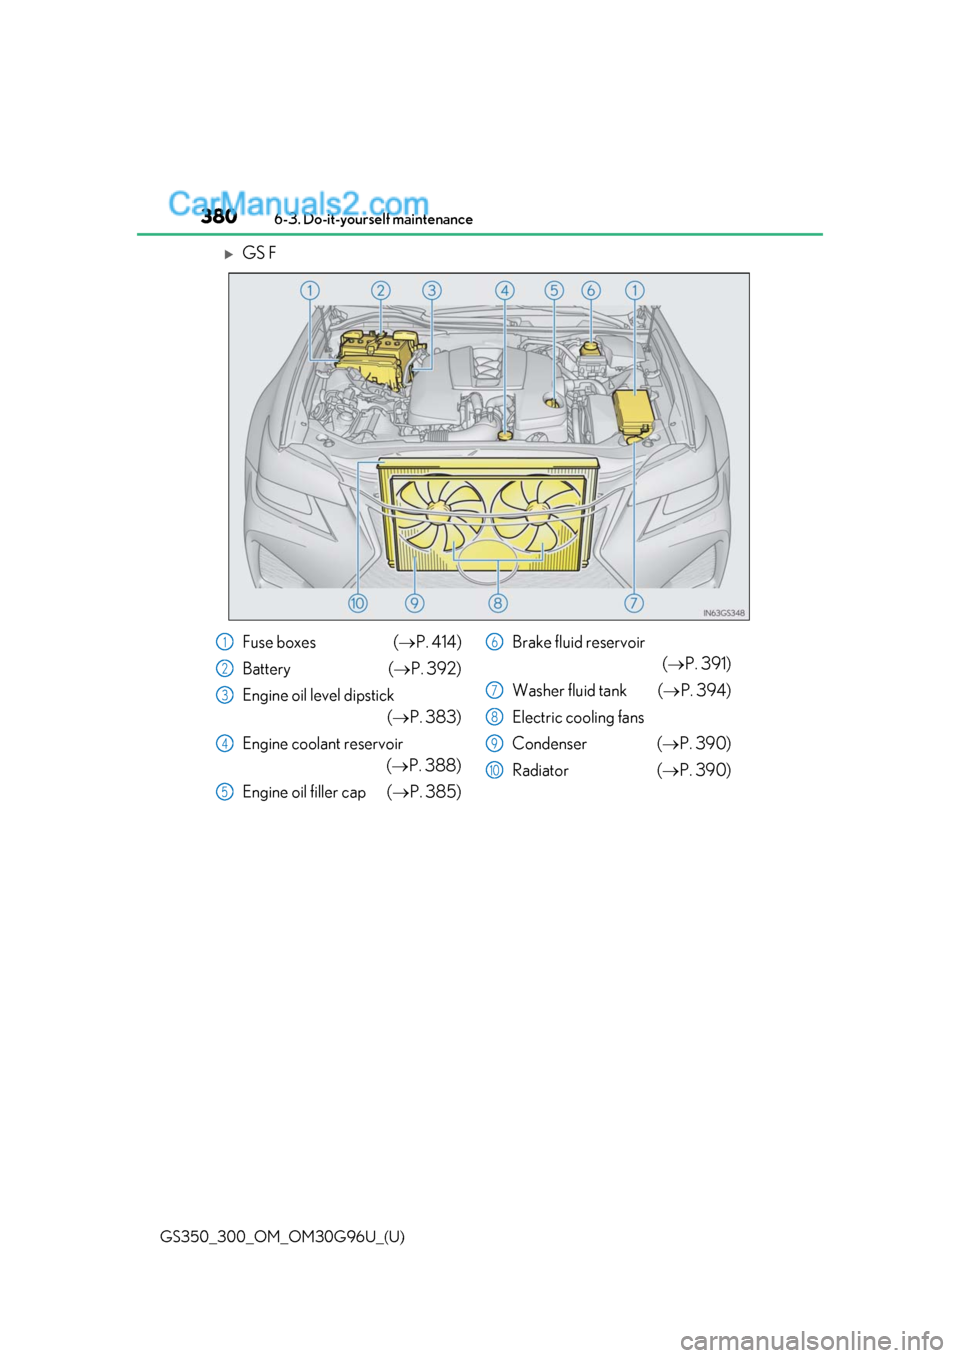 Lexus GS300 2019 Owners Guide 380
GS350_300_OM_OM30G96U_(U)6-3. Do-it-yourself maintenance
GS F
Fuse boxes (
P. 414)
Battery (P. 392)
Engine oil level dipstick (P. 383)
Engine coolant reservoir (P. 388)
Engine oil f